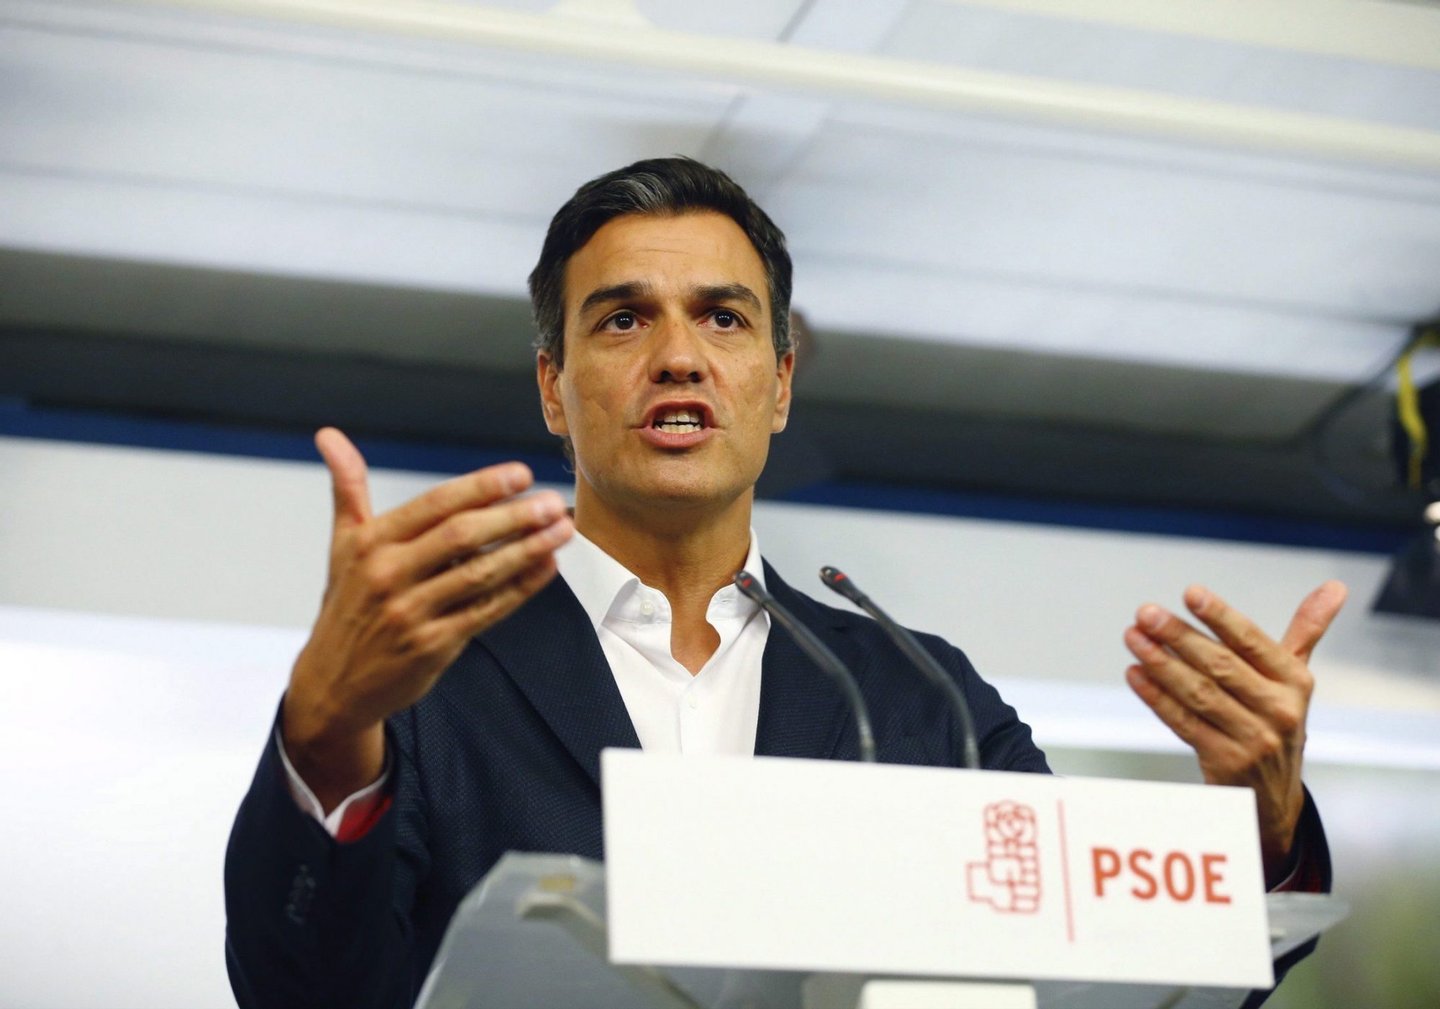 PSOE's Executive Committee meeting